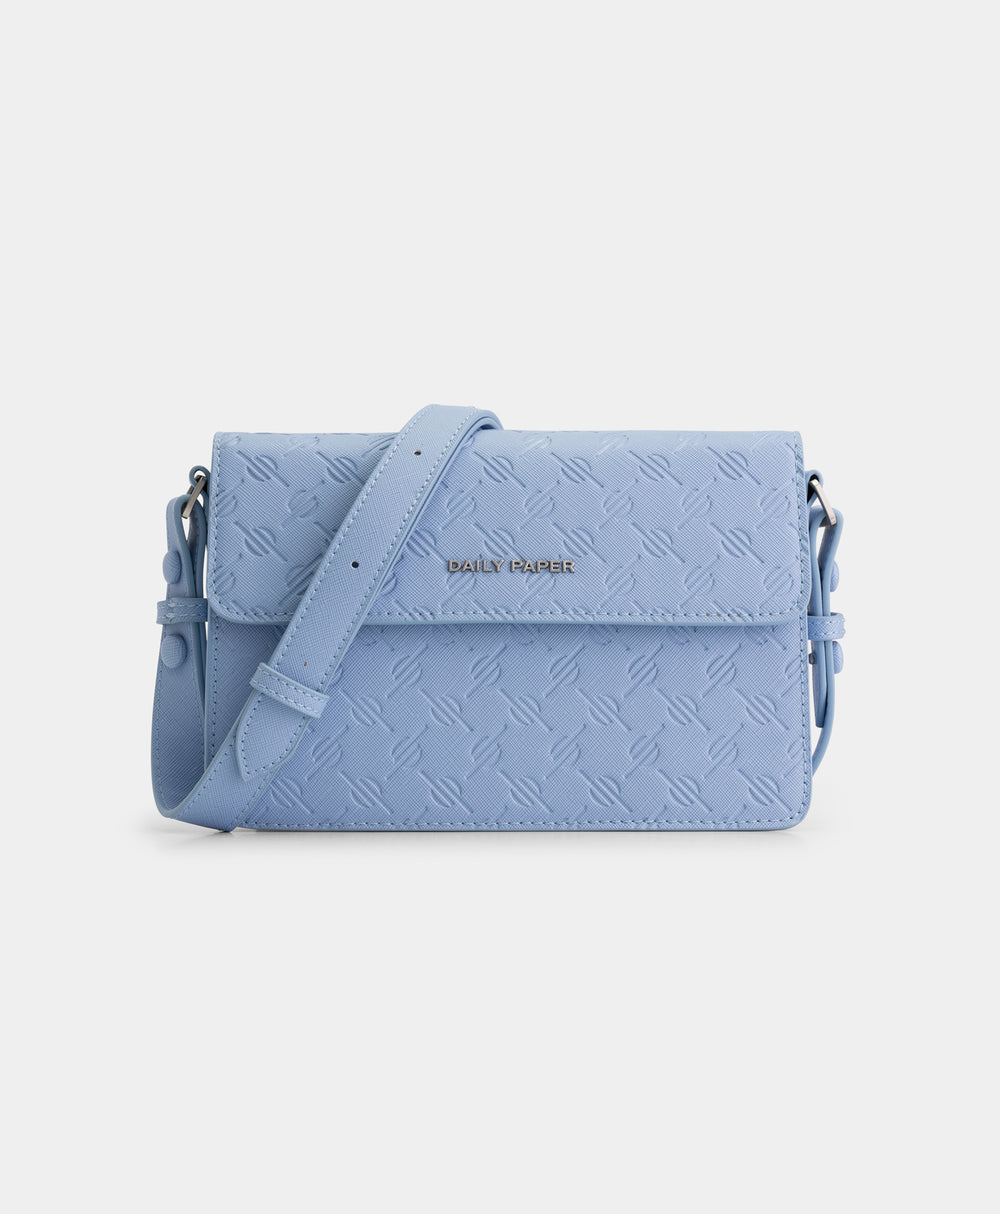 DP - Baby Blue Meru Monogram Bag - Packshot - Front 